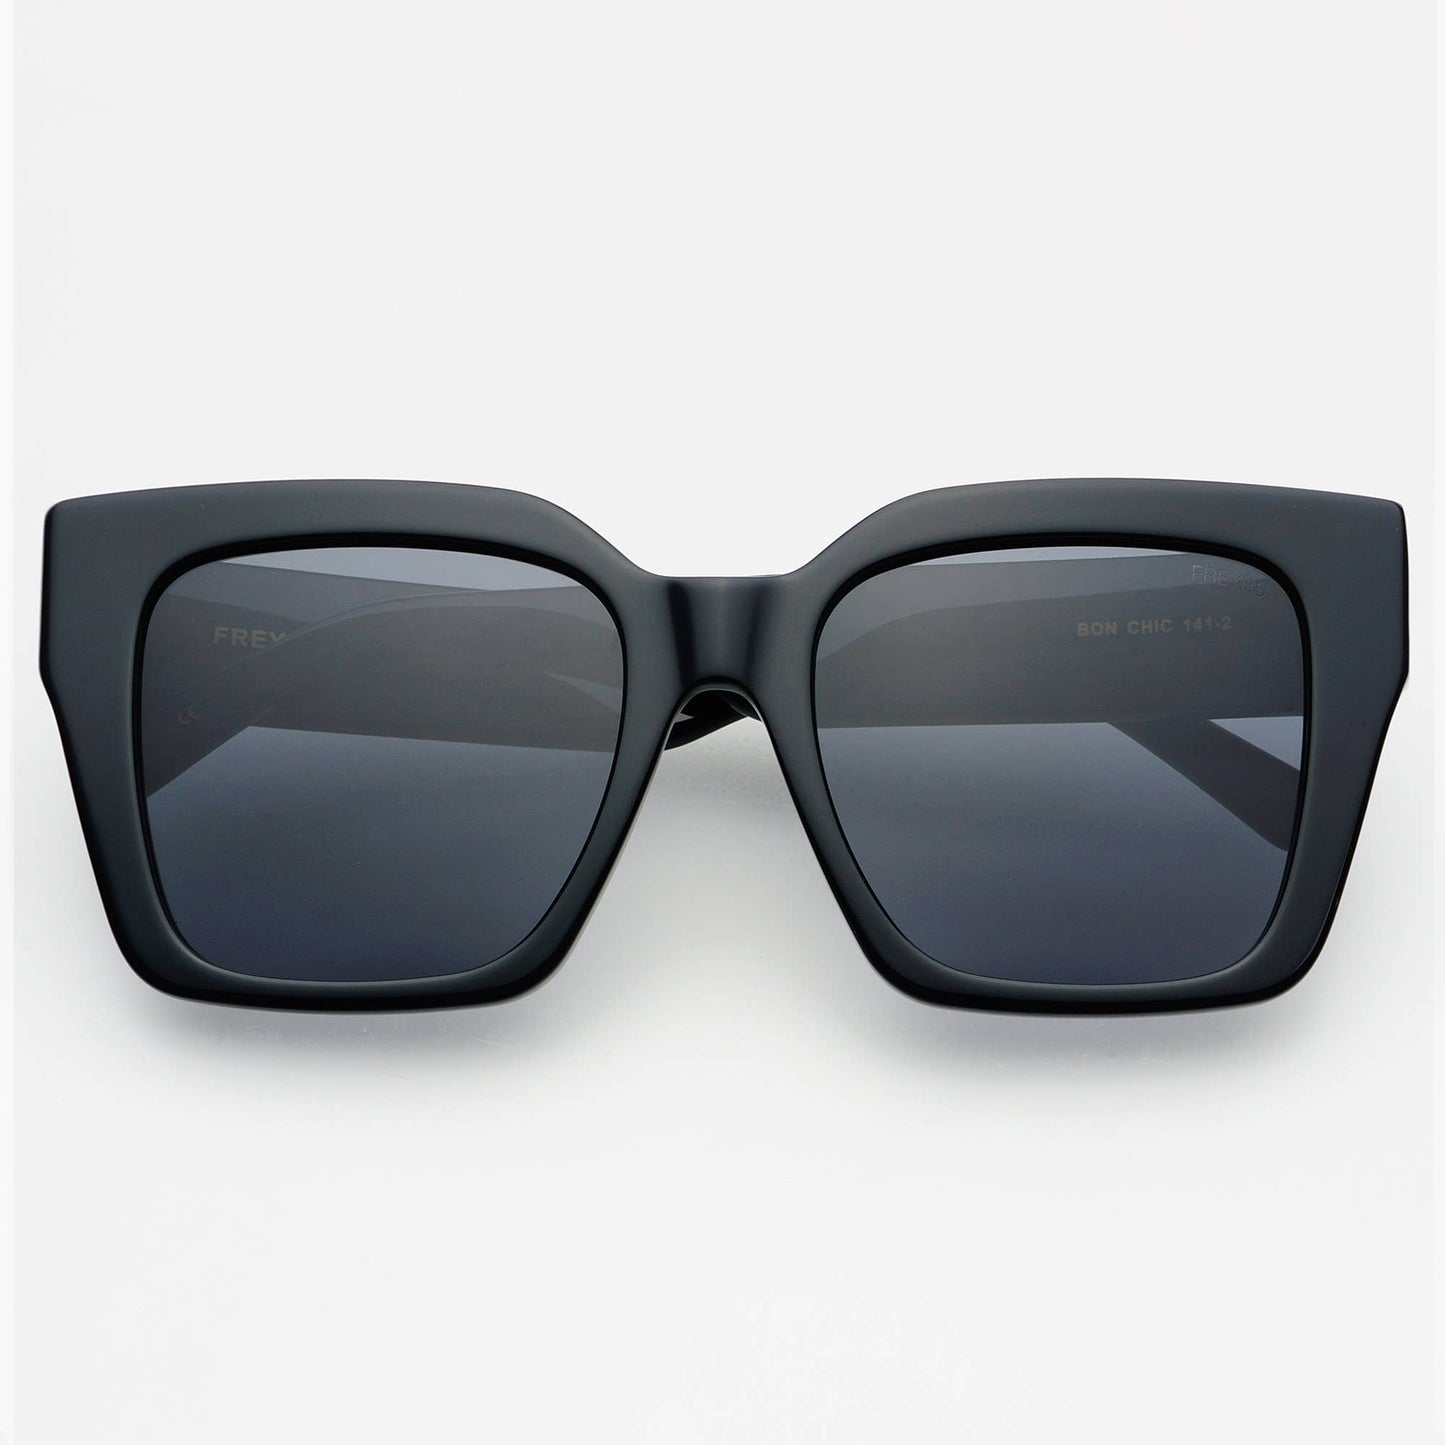 Bon Chic Acetate Oversized Square Sunglasses